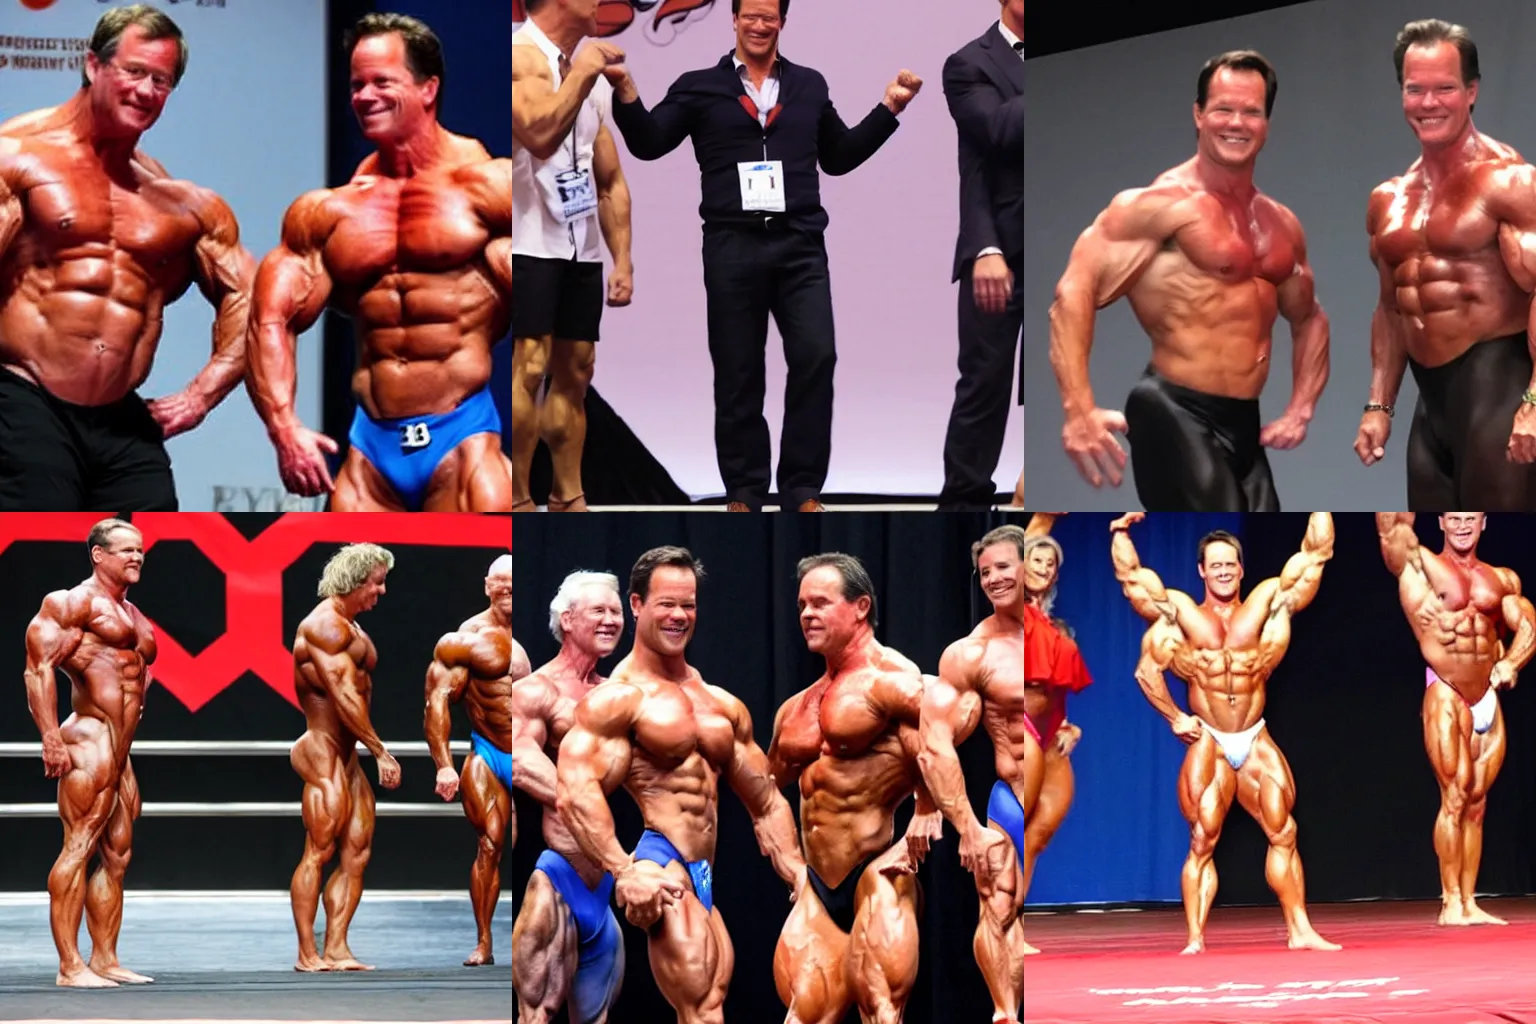 Prompt: Mark Rutte at a bodybuilding contest